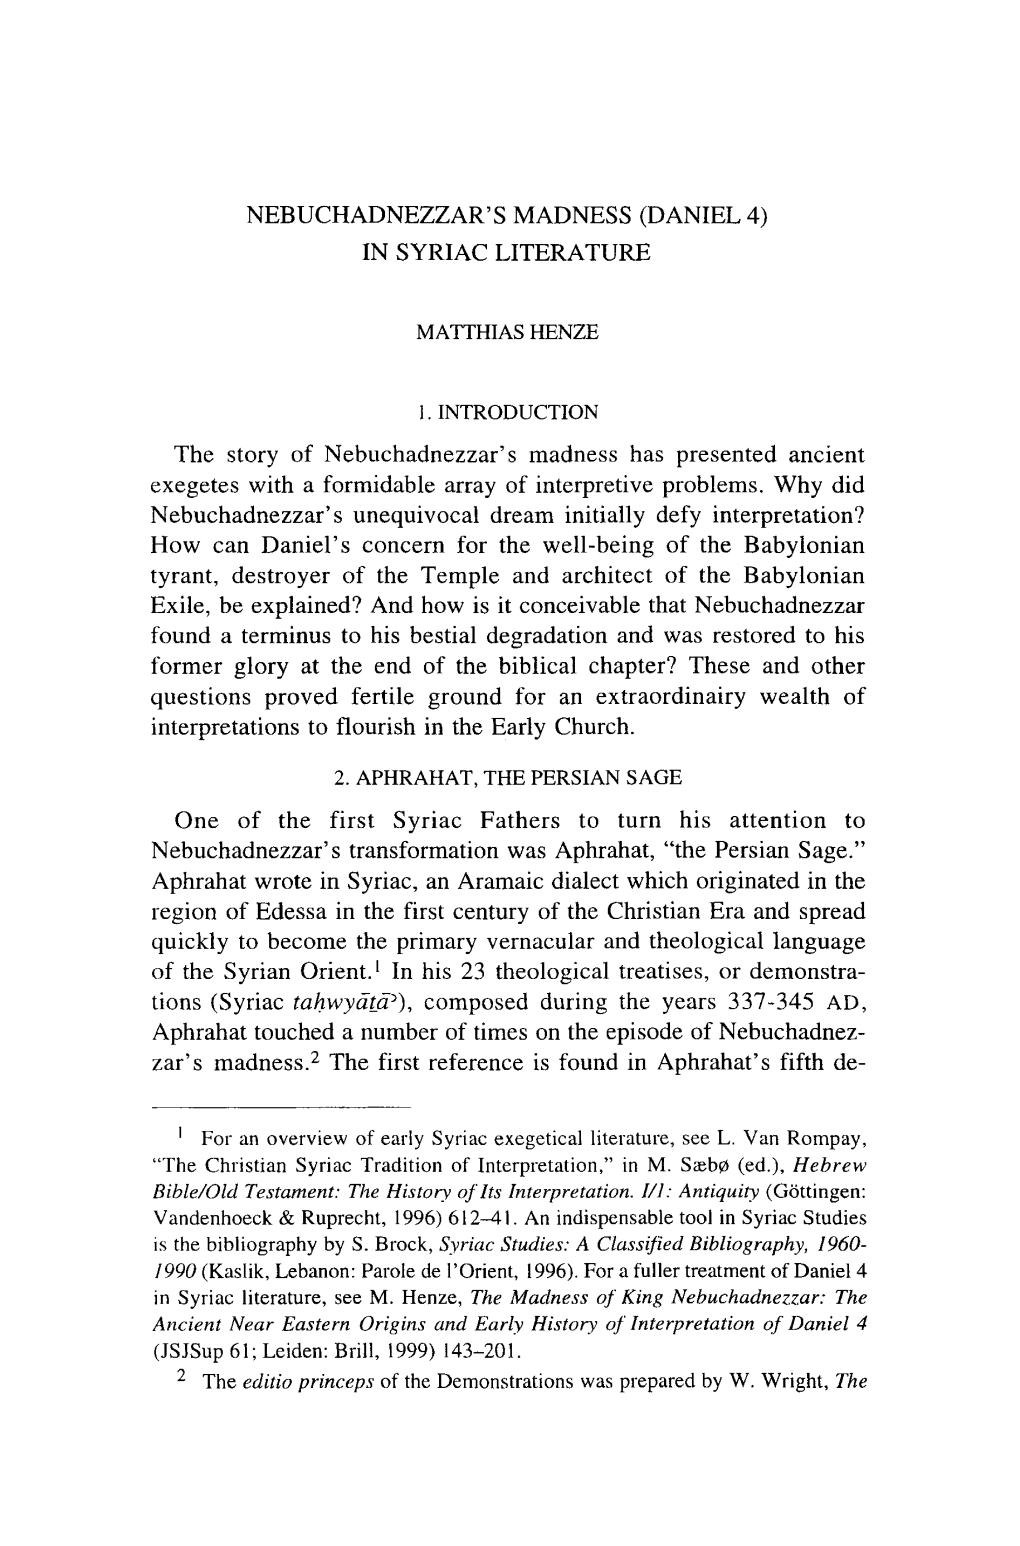 Nebuchadnezzar's Madness (Daniel 4) in Syriac Literature